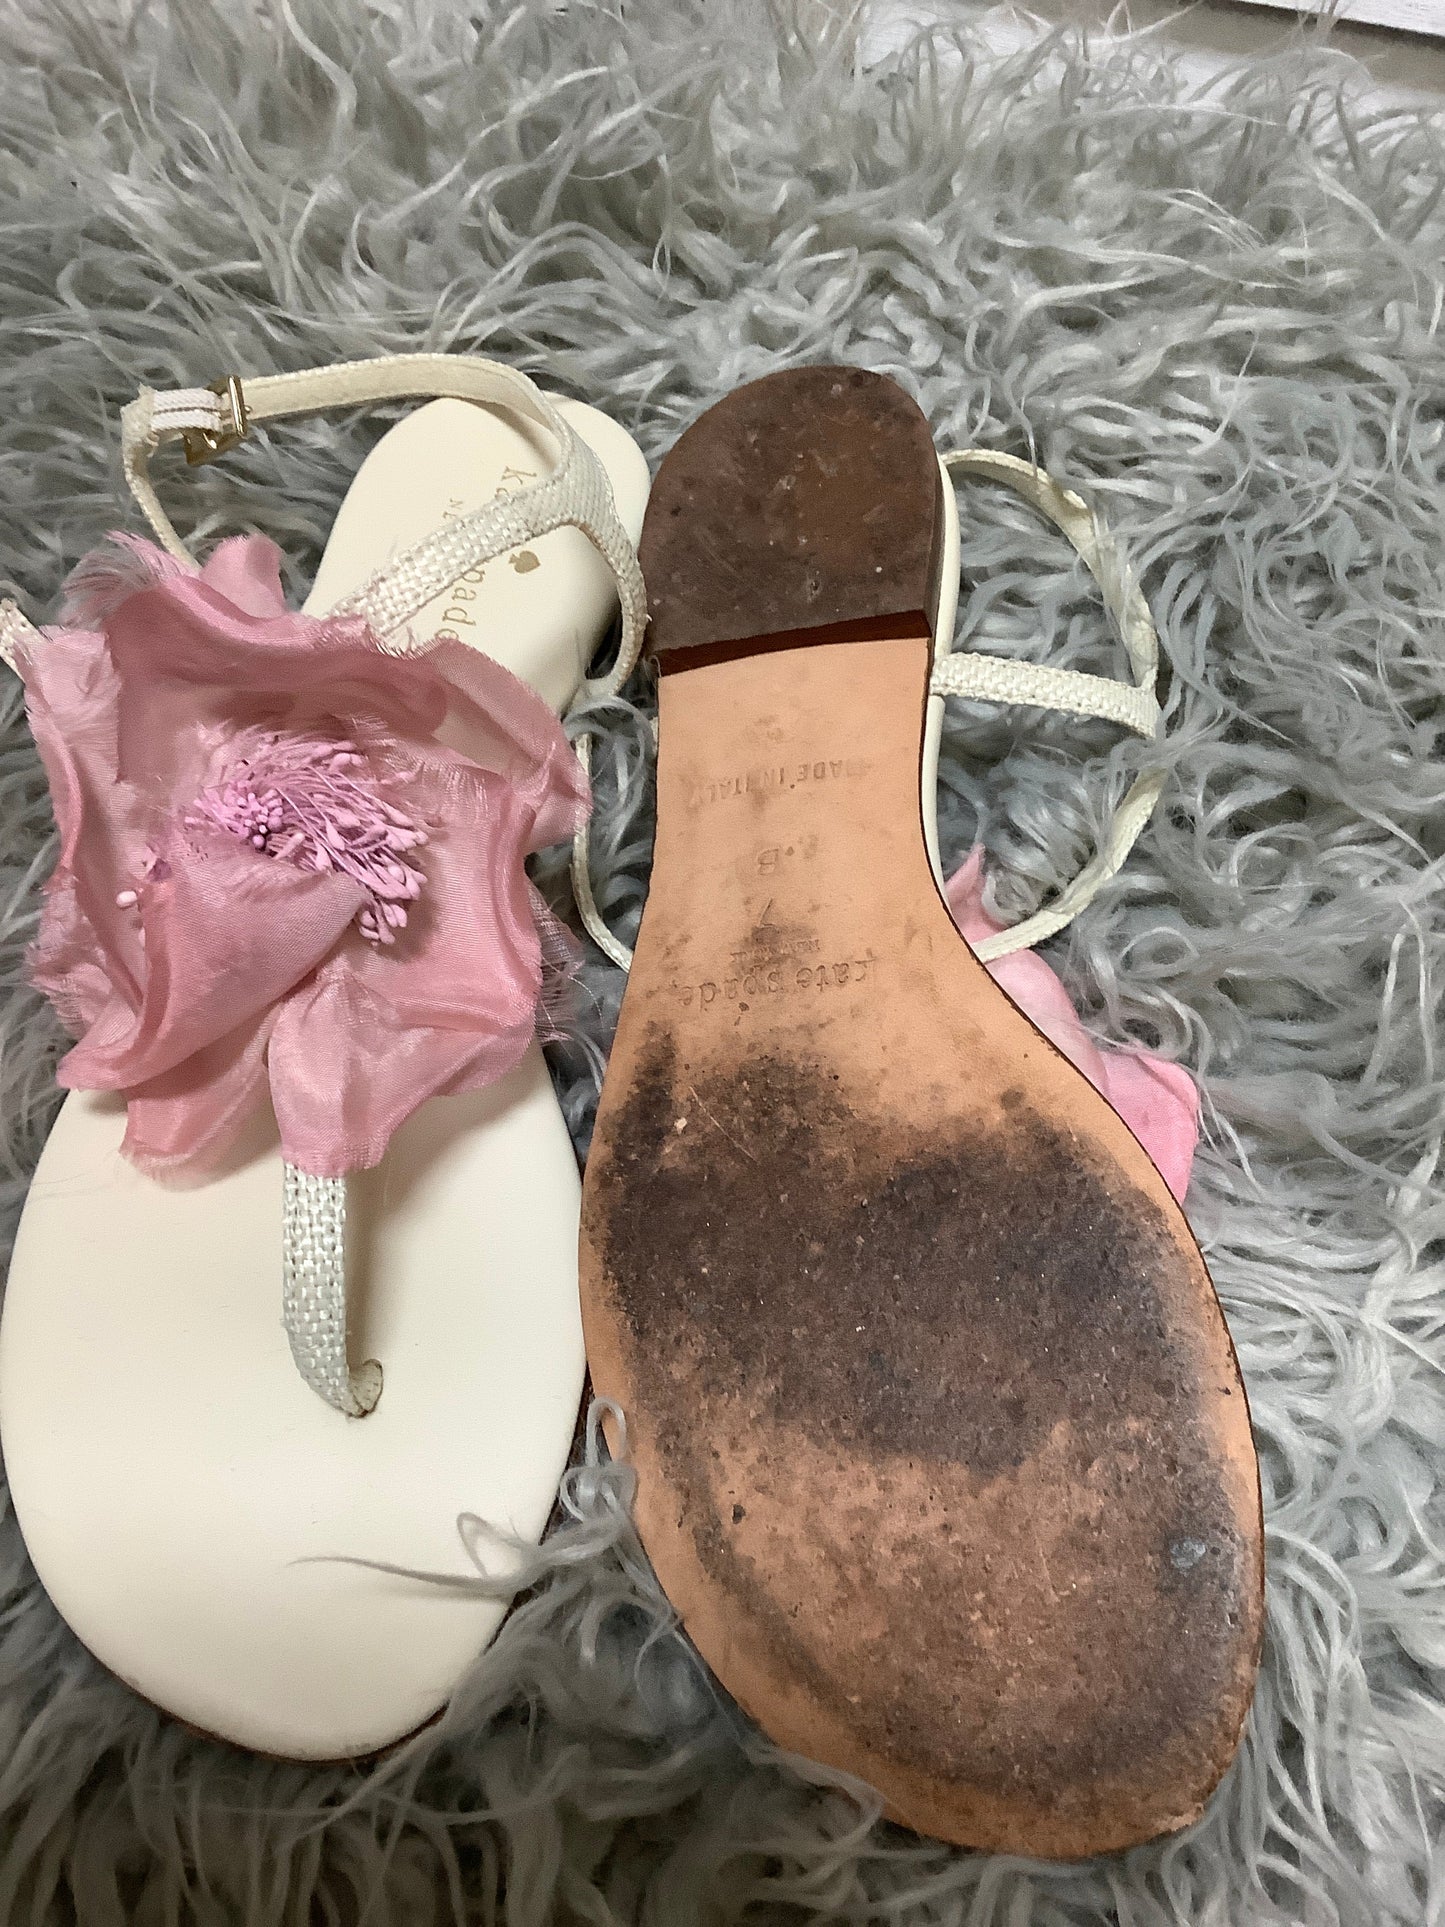 Sandals Flip Flops By Kate Spade  Size: 7